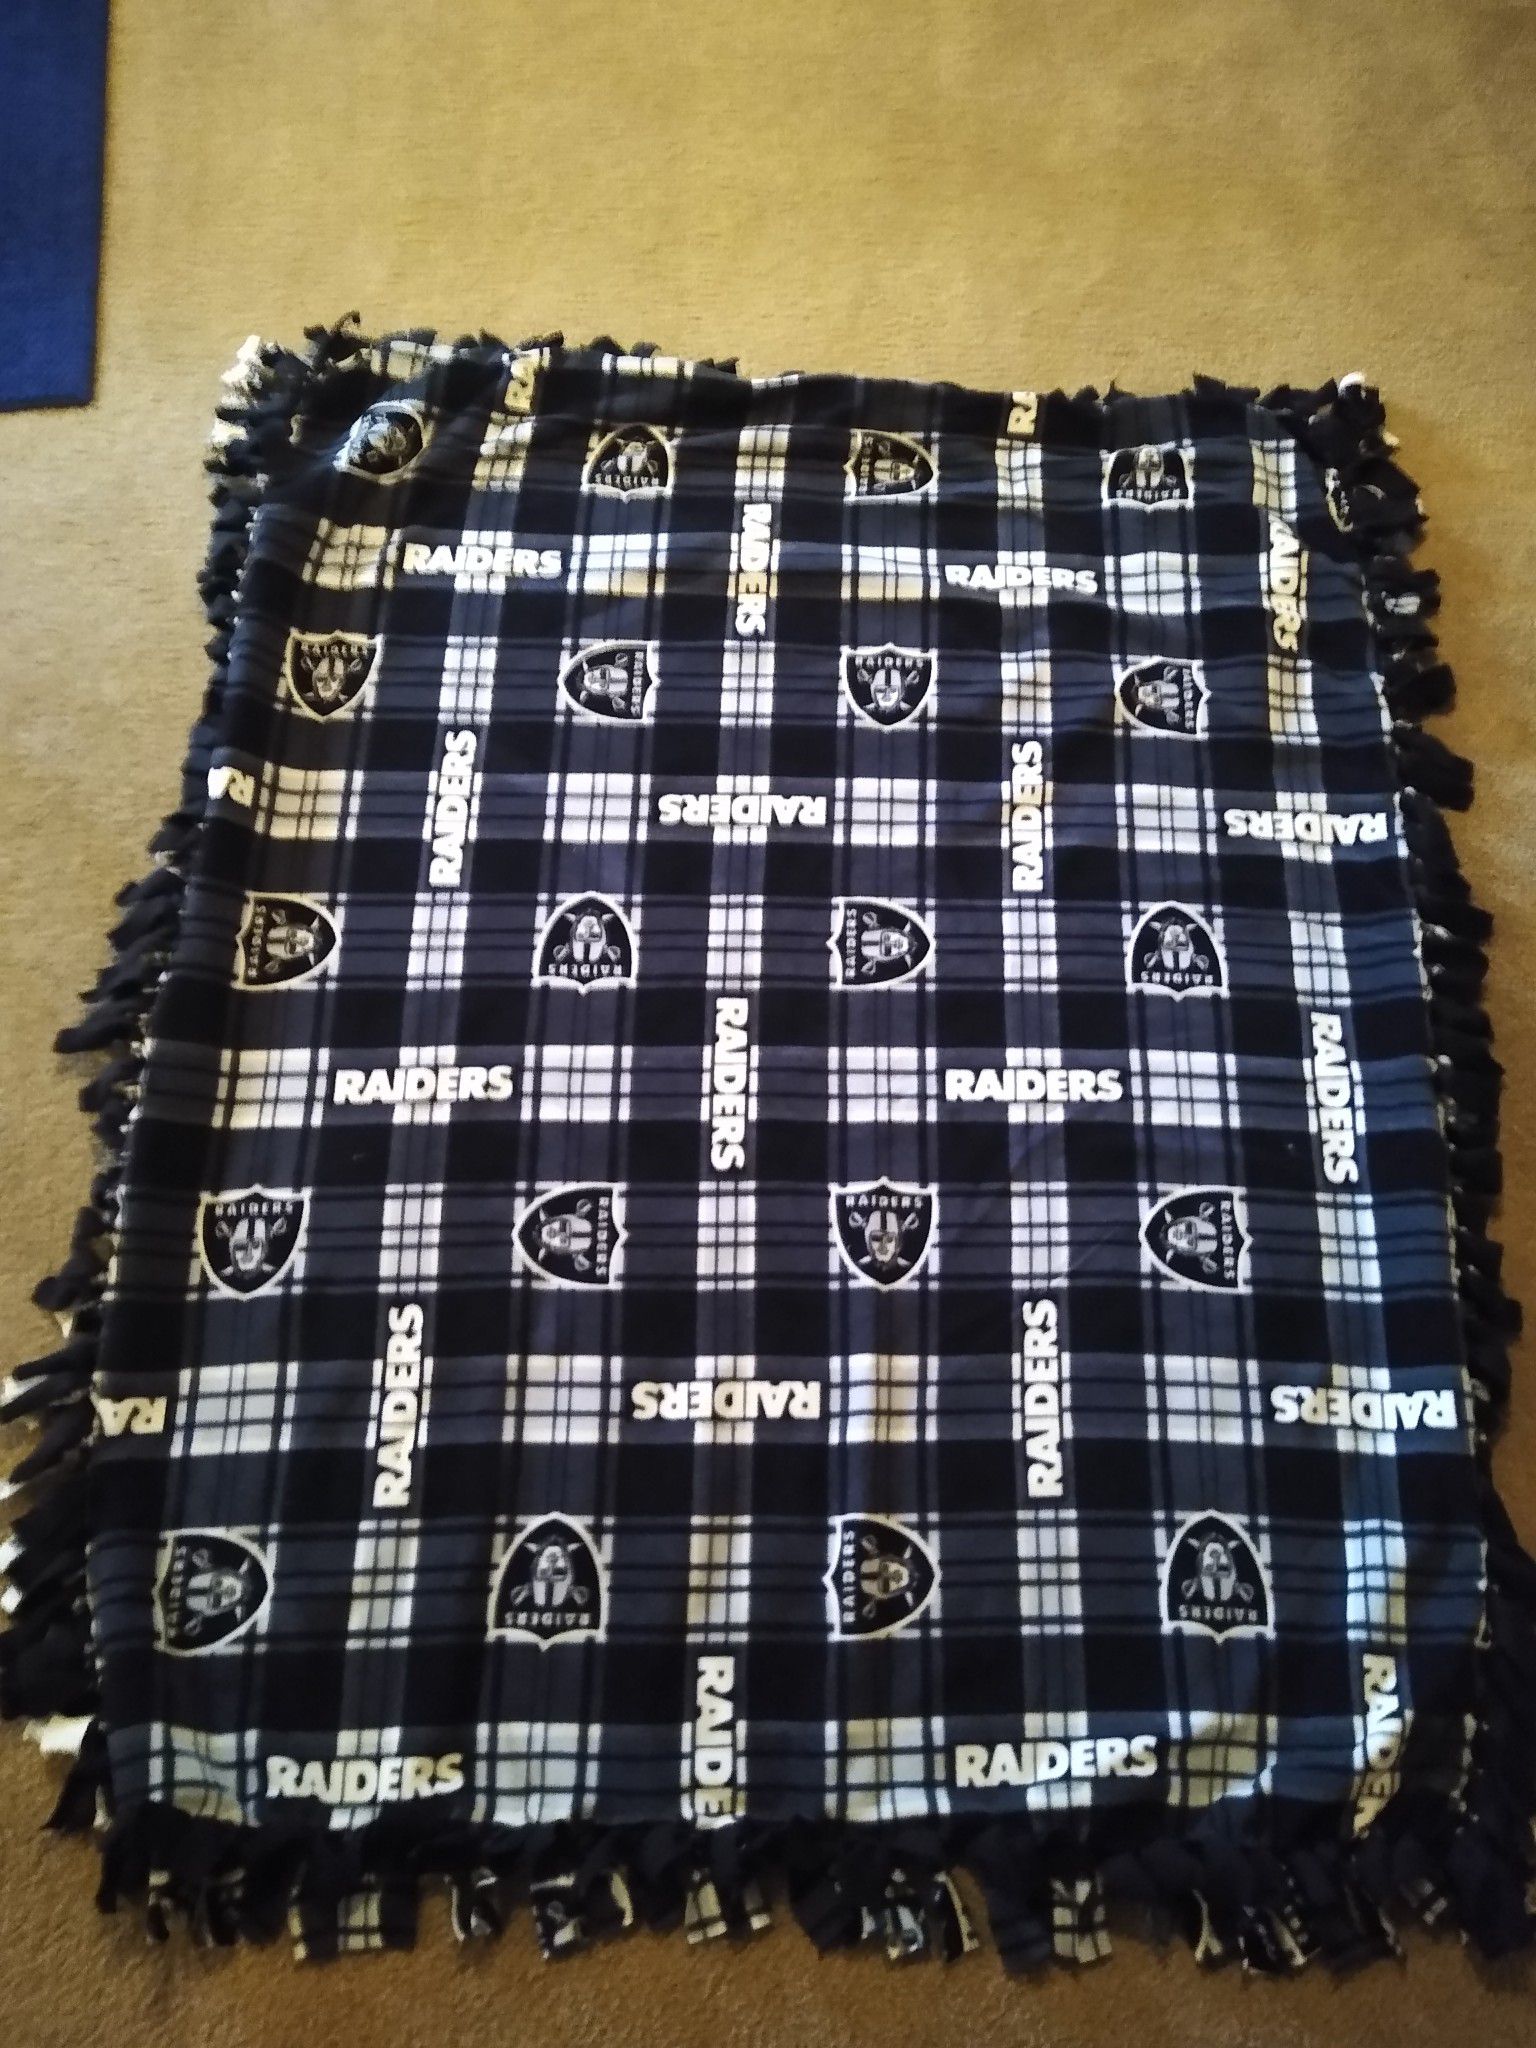 (NEW) Handmade Raider blanket $20